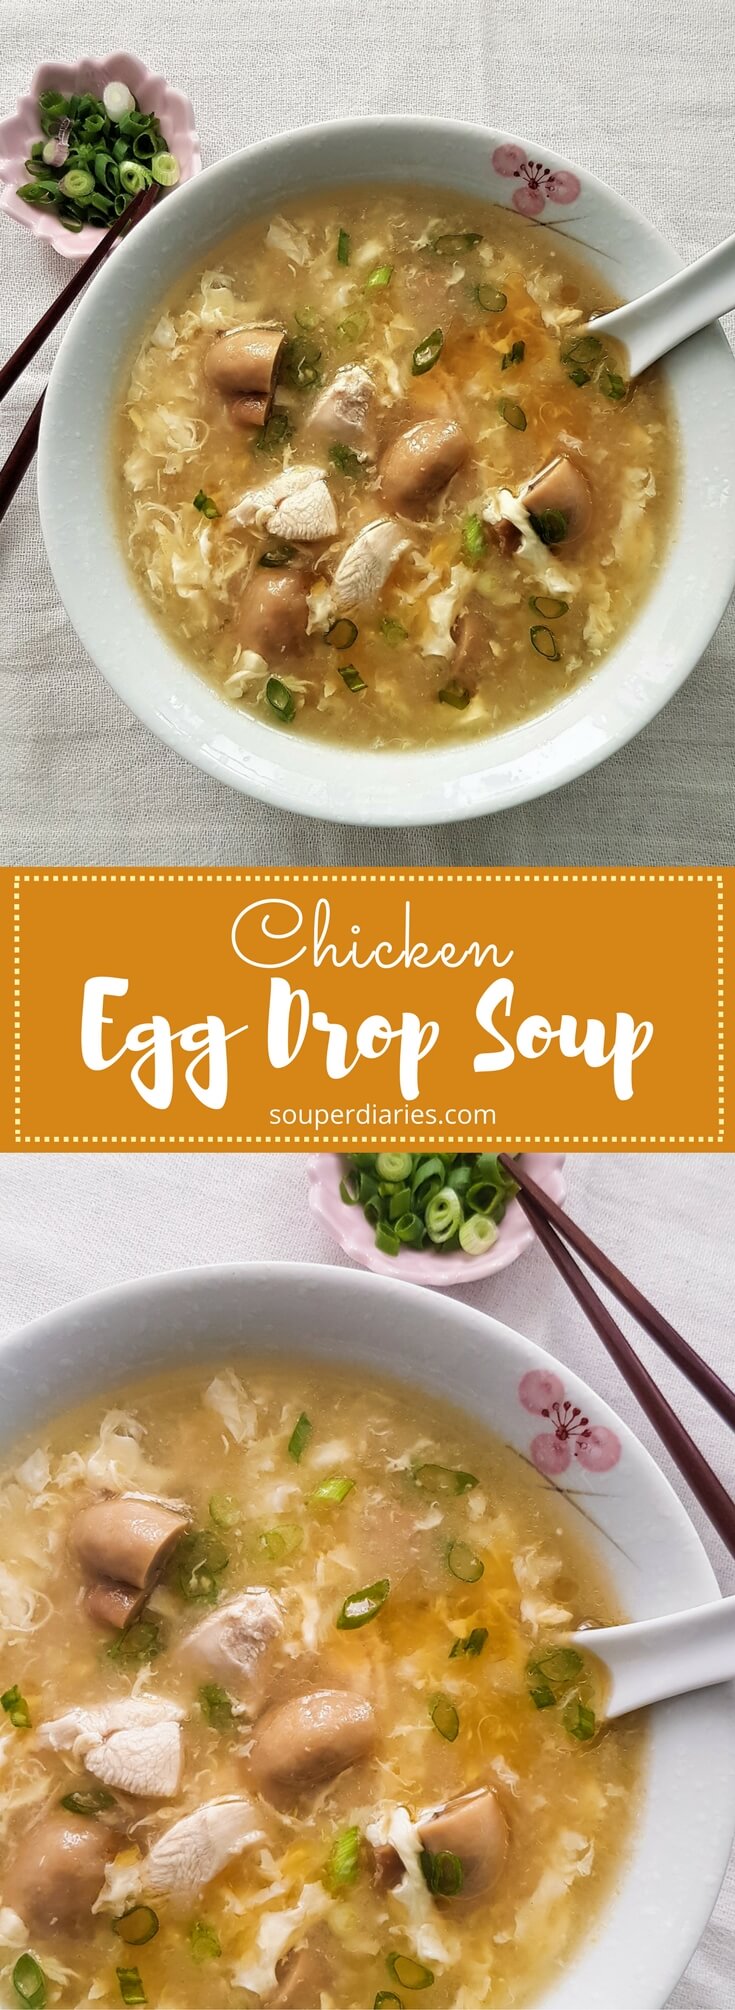 Chicken egg drop soup